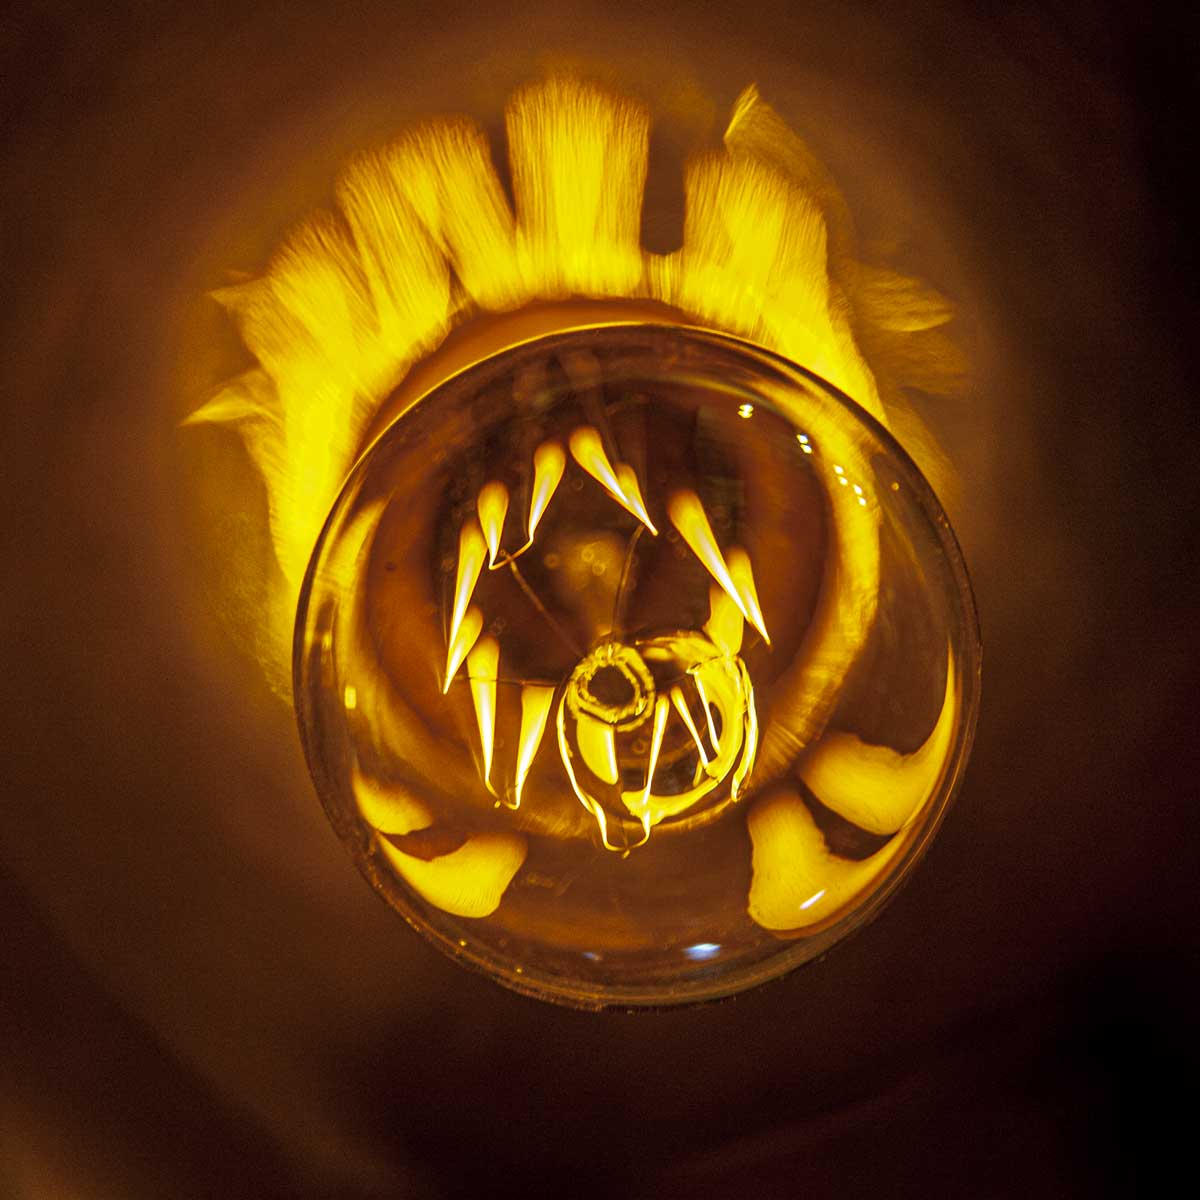 glowing filaments in a light bulb